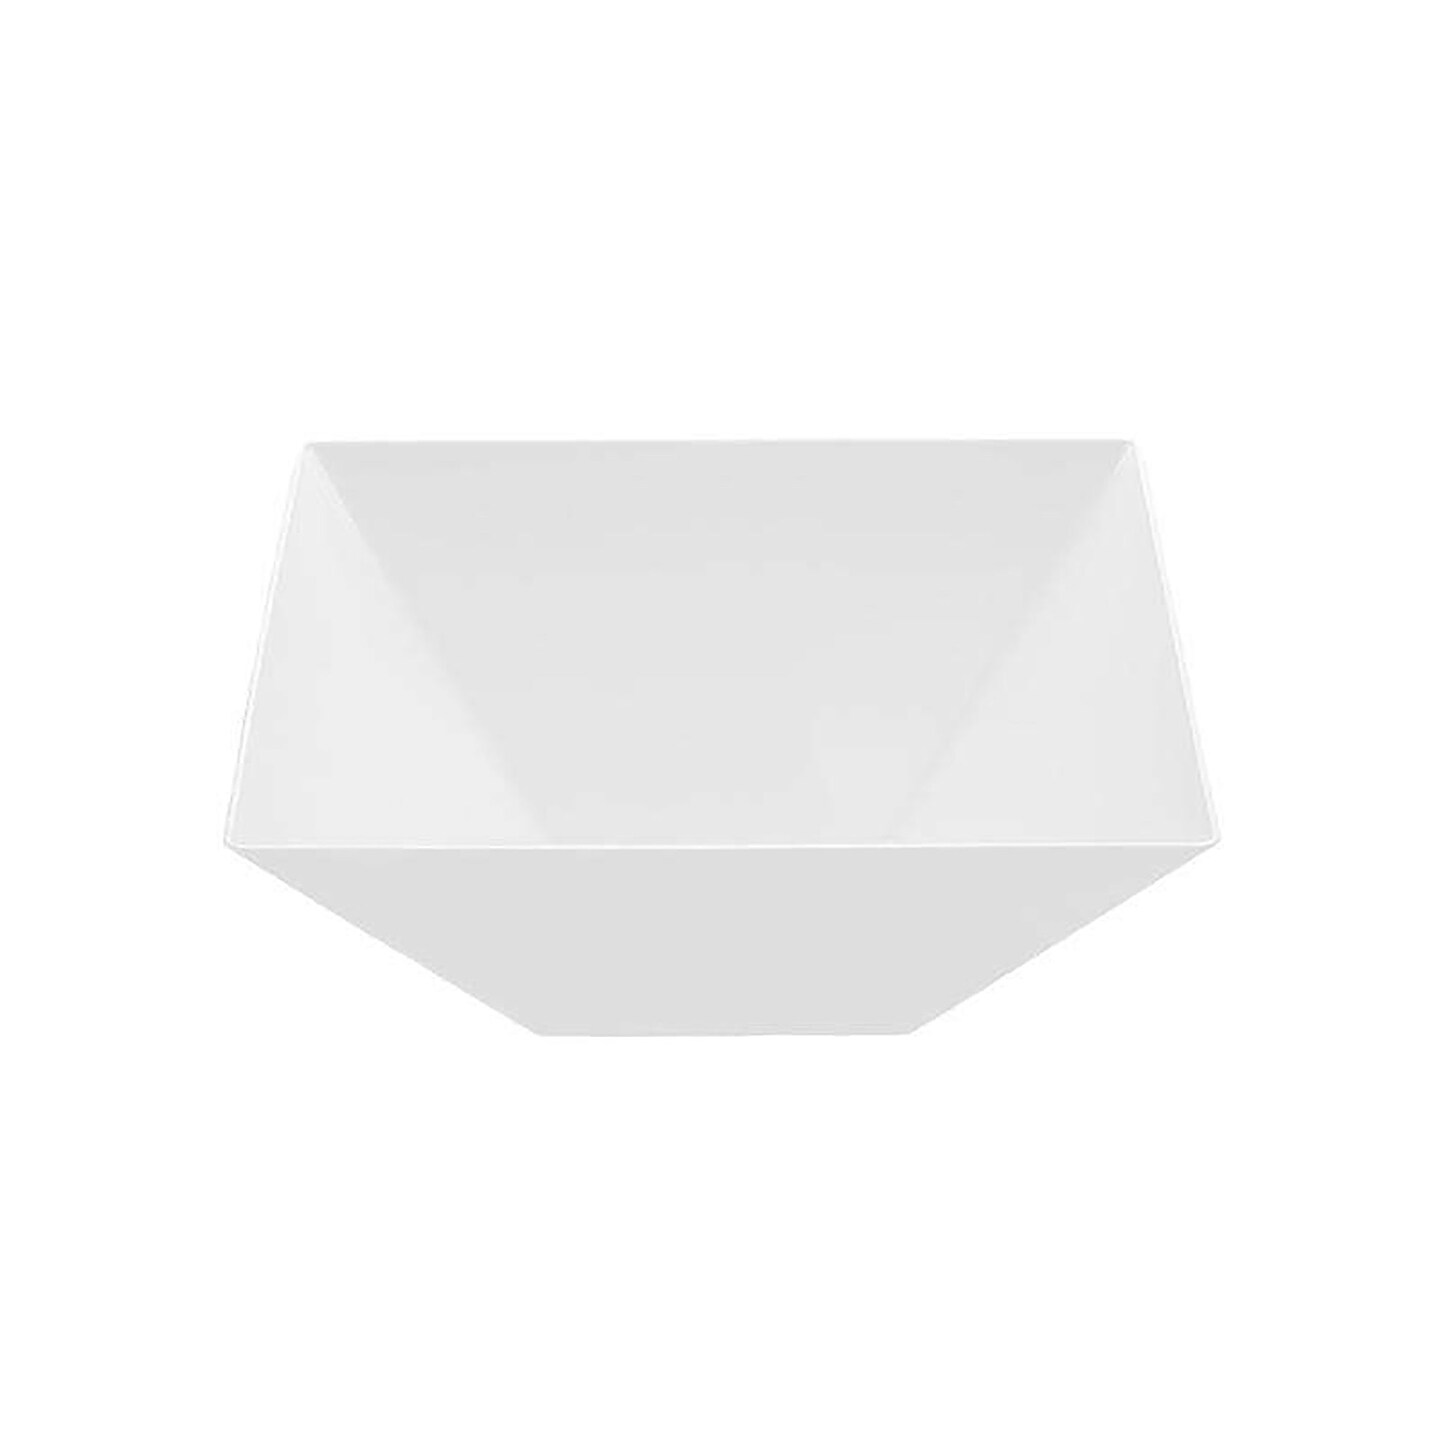 White Square Plastic Serving Bowls - 3 Quarts (24 Bowls)